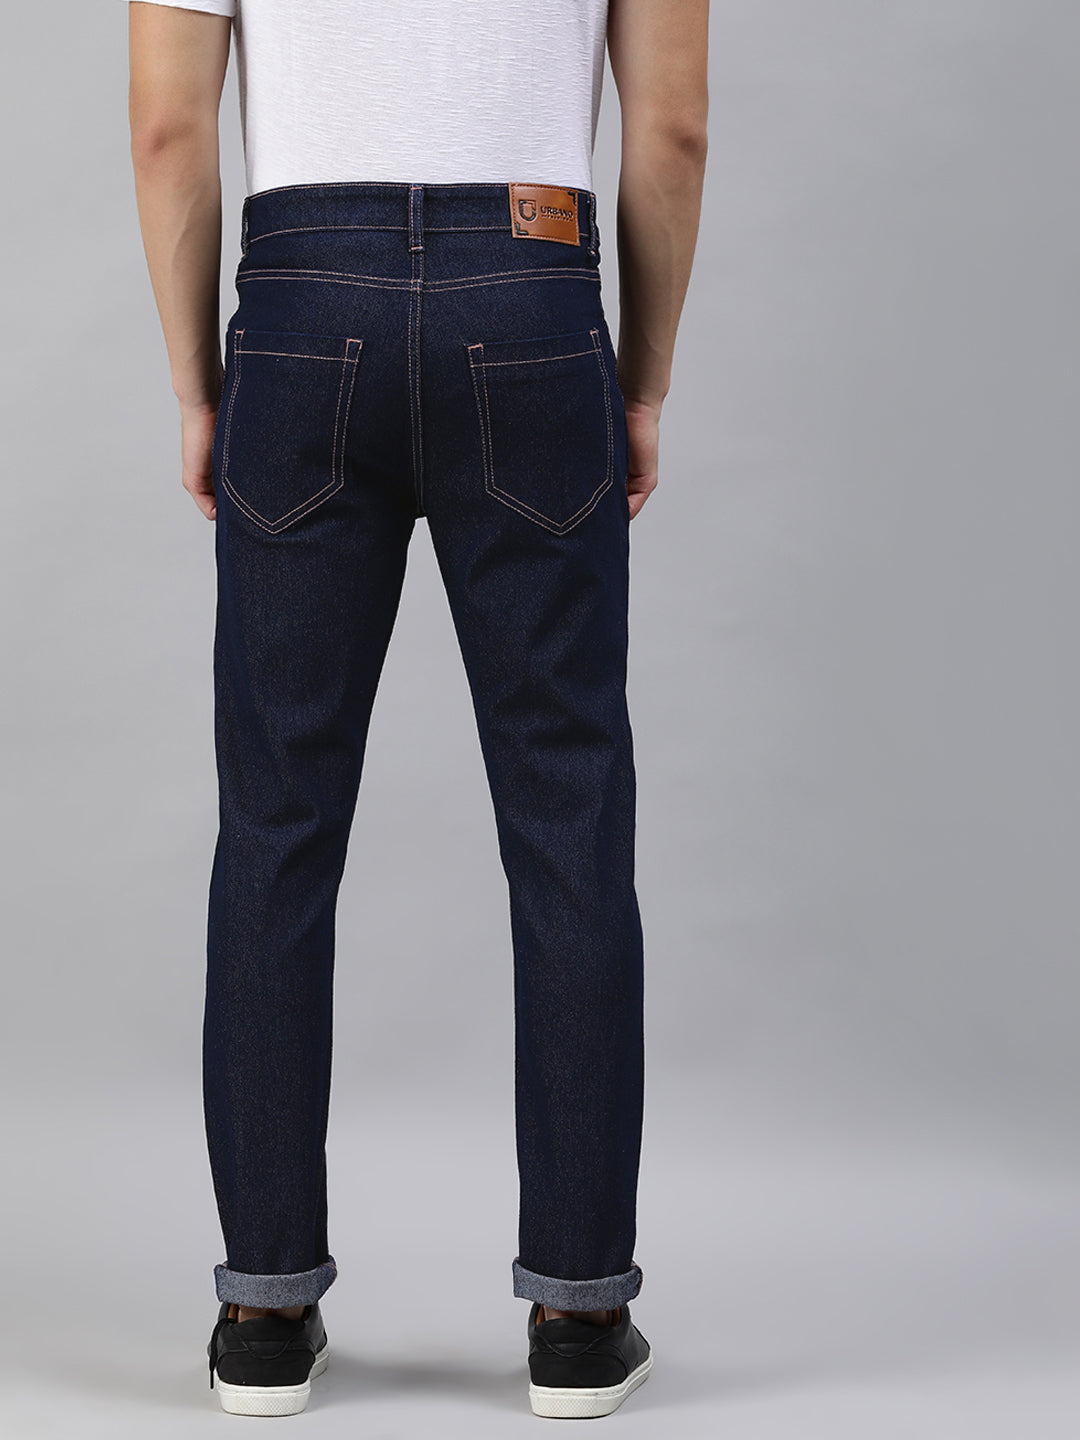 Urbano Fashion Men's Dark Blue Slim Fit Denim Jeans Stretchable